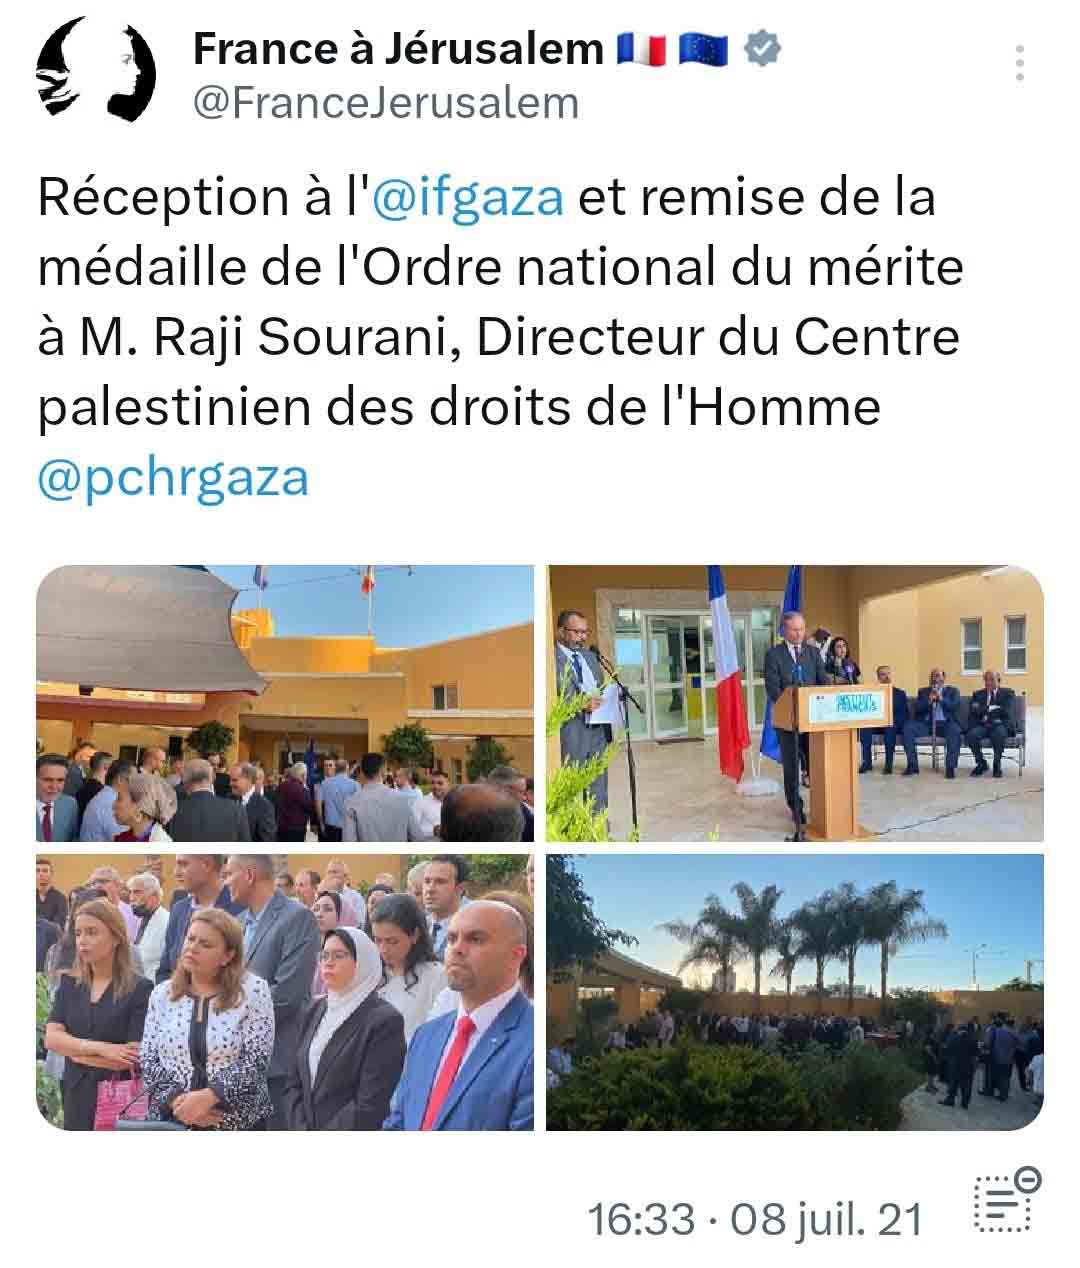 Tweet Ambassade France en Israël sur décoration association palestinienne juillet 2021